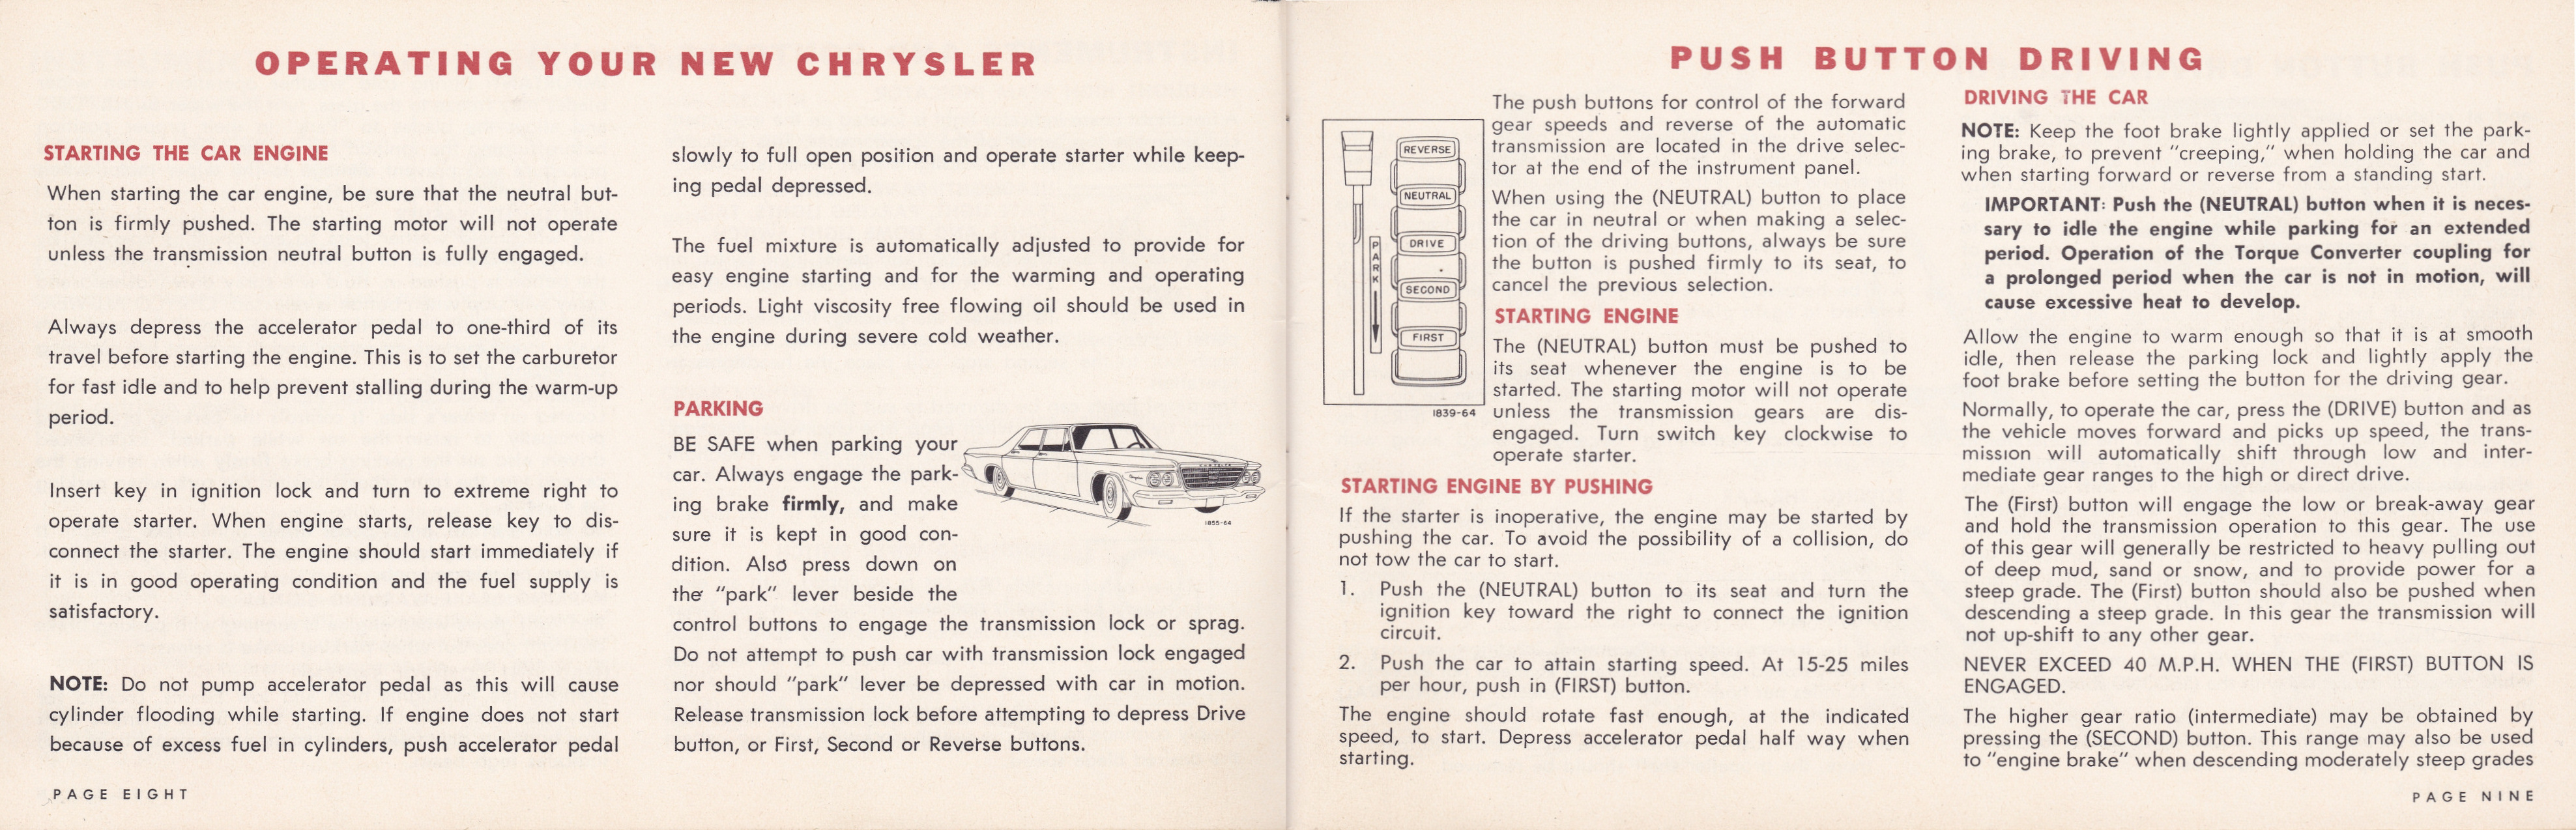 1964_Chrysler_Owners_Manual_Cdn-08-09